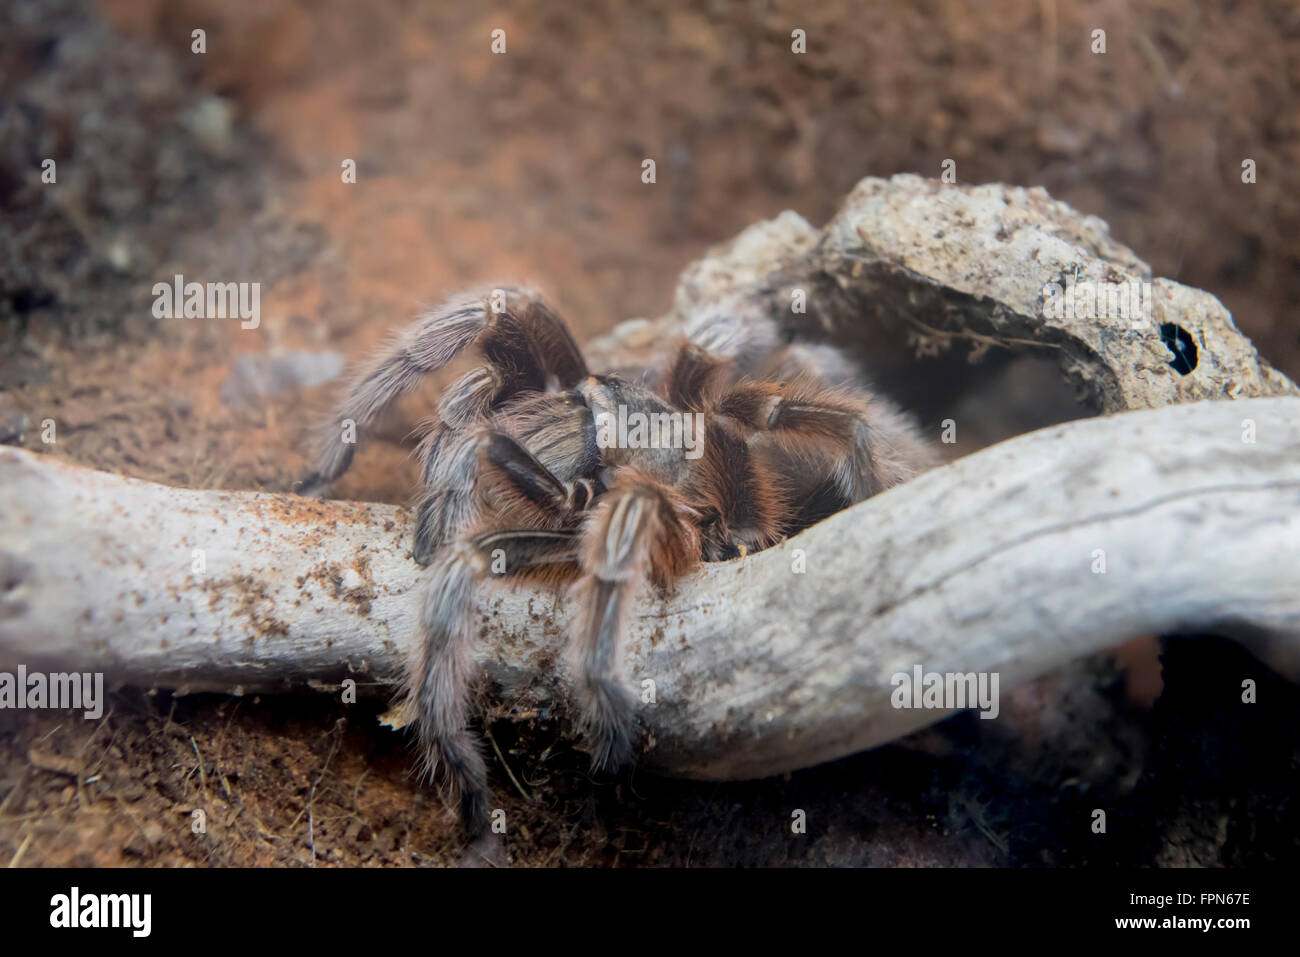 Tarantula waiting, half hidden and camouflaged in its den, to ambush its prey. Stock Photo